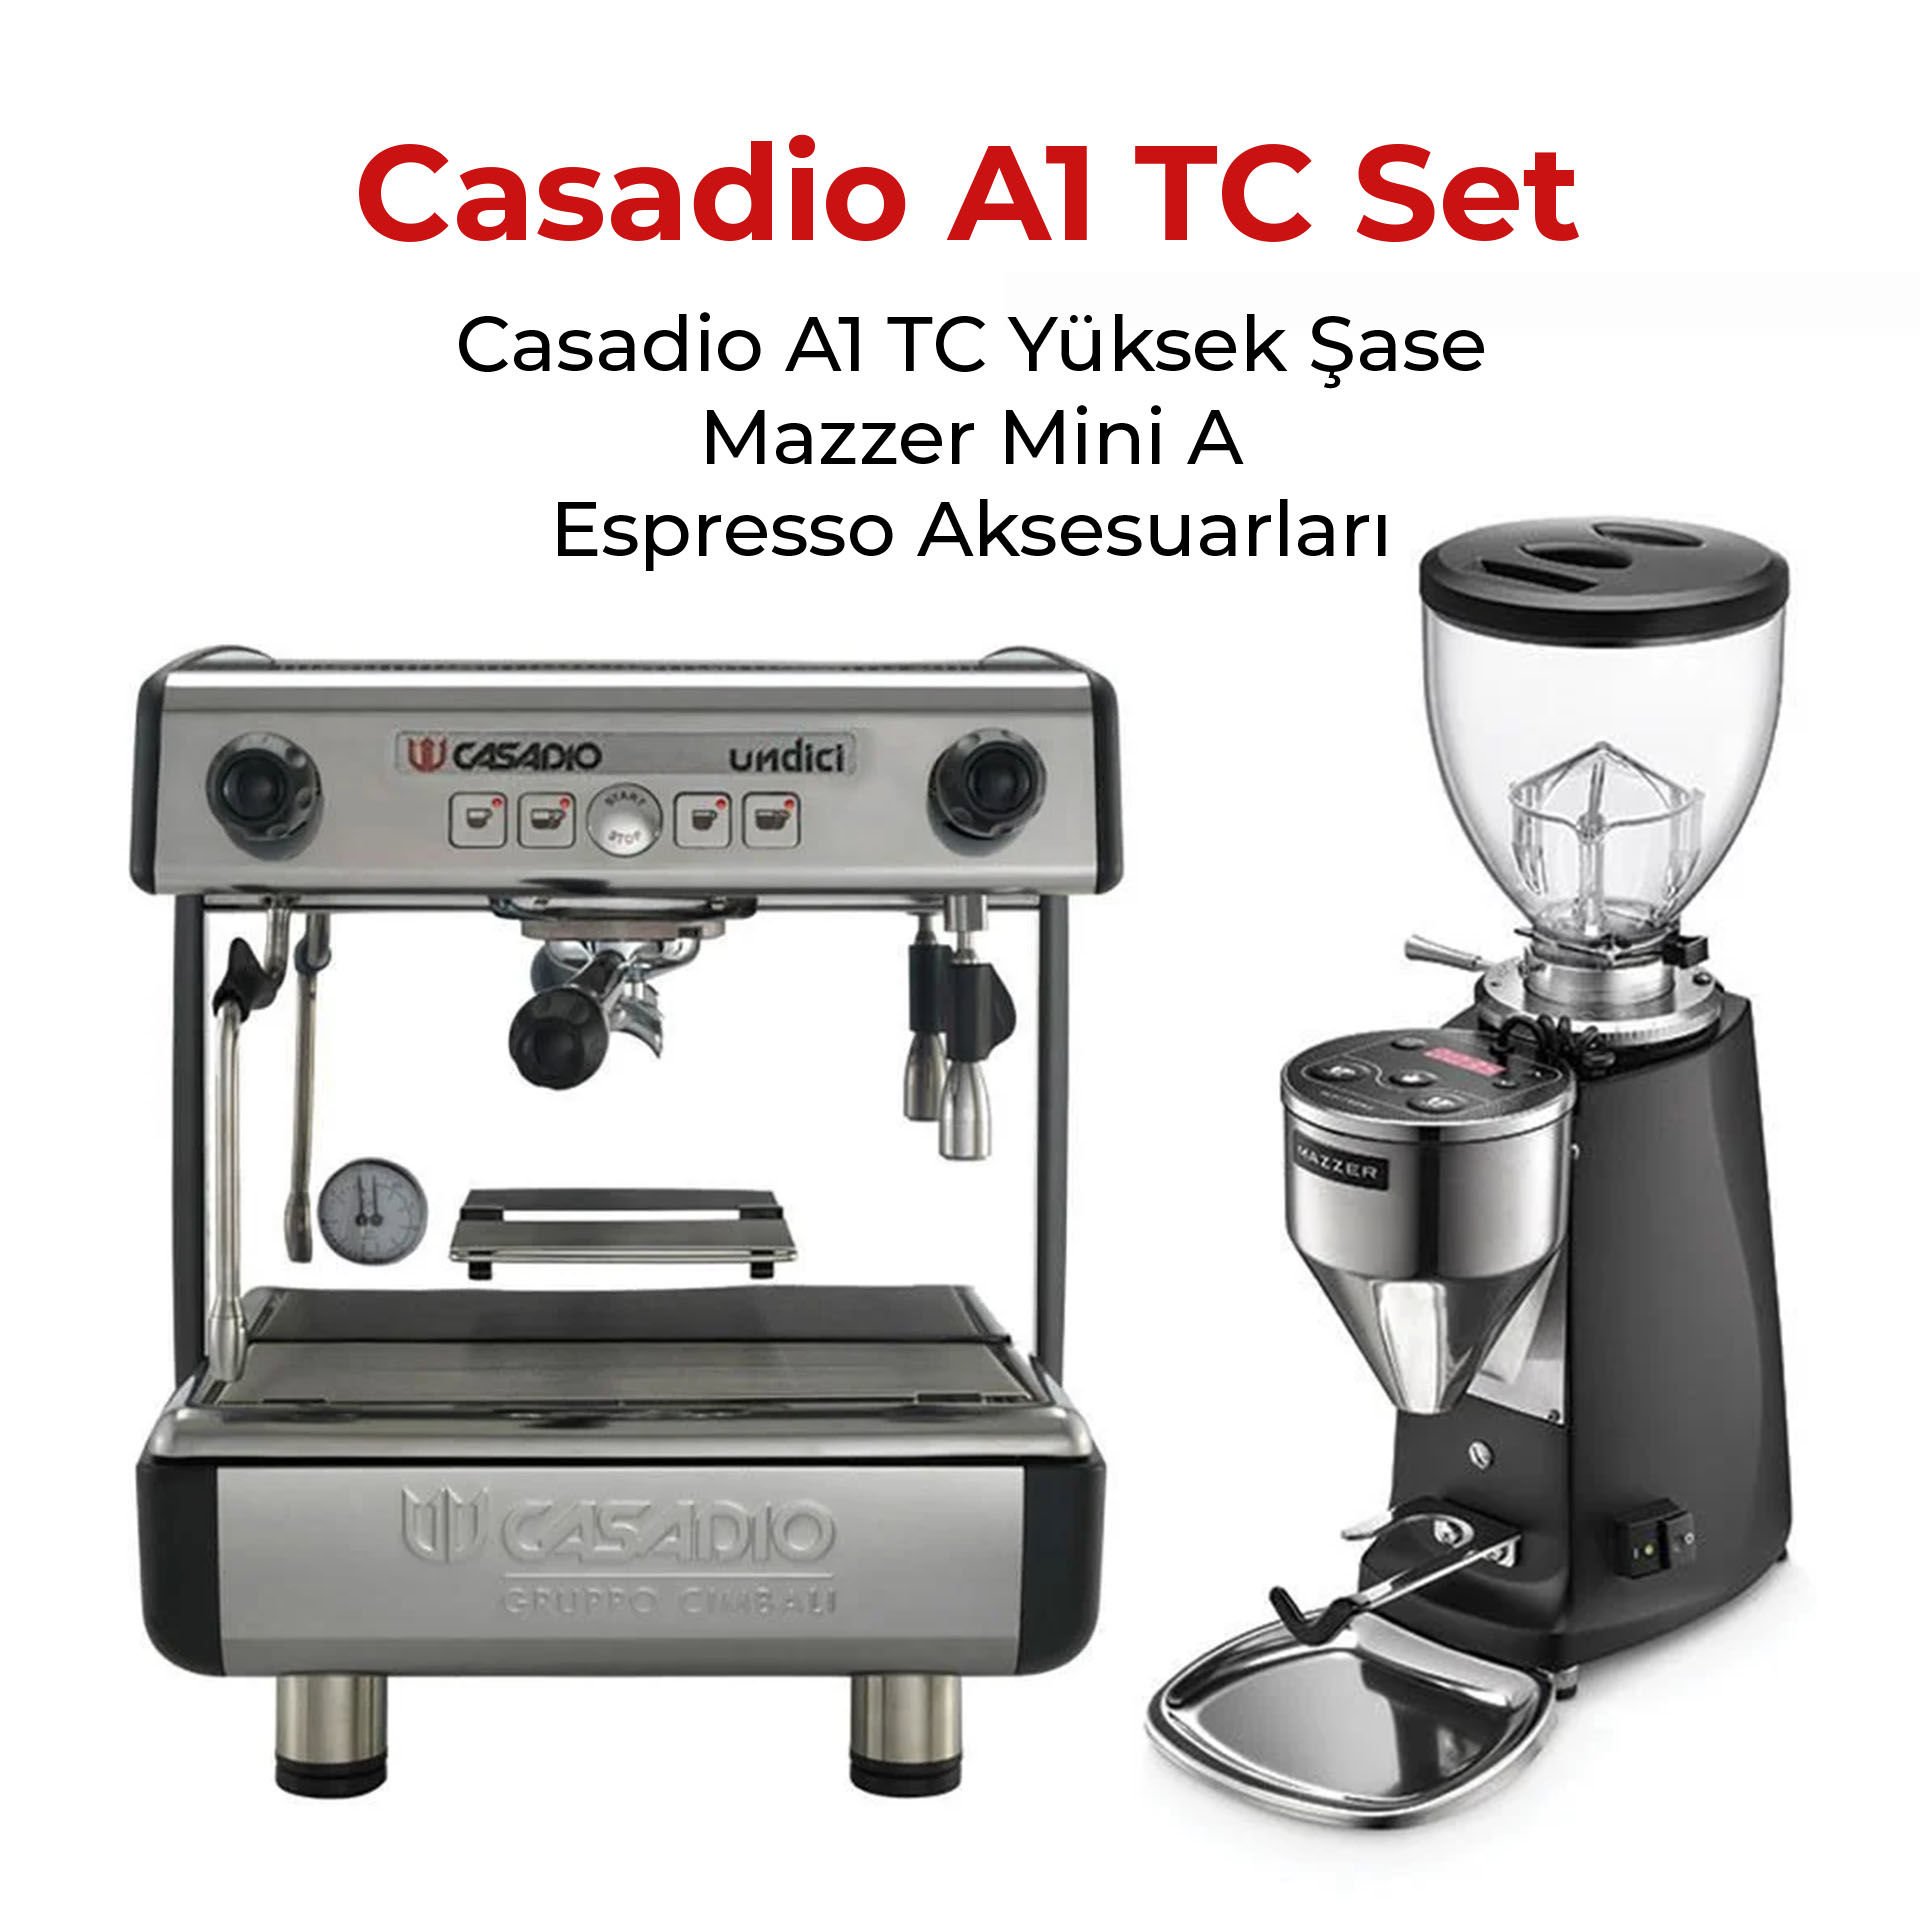 Casadio A1 Yüksek Şase Espresso Seti